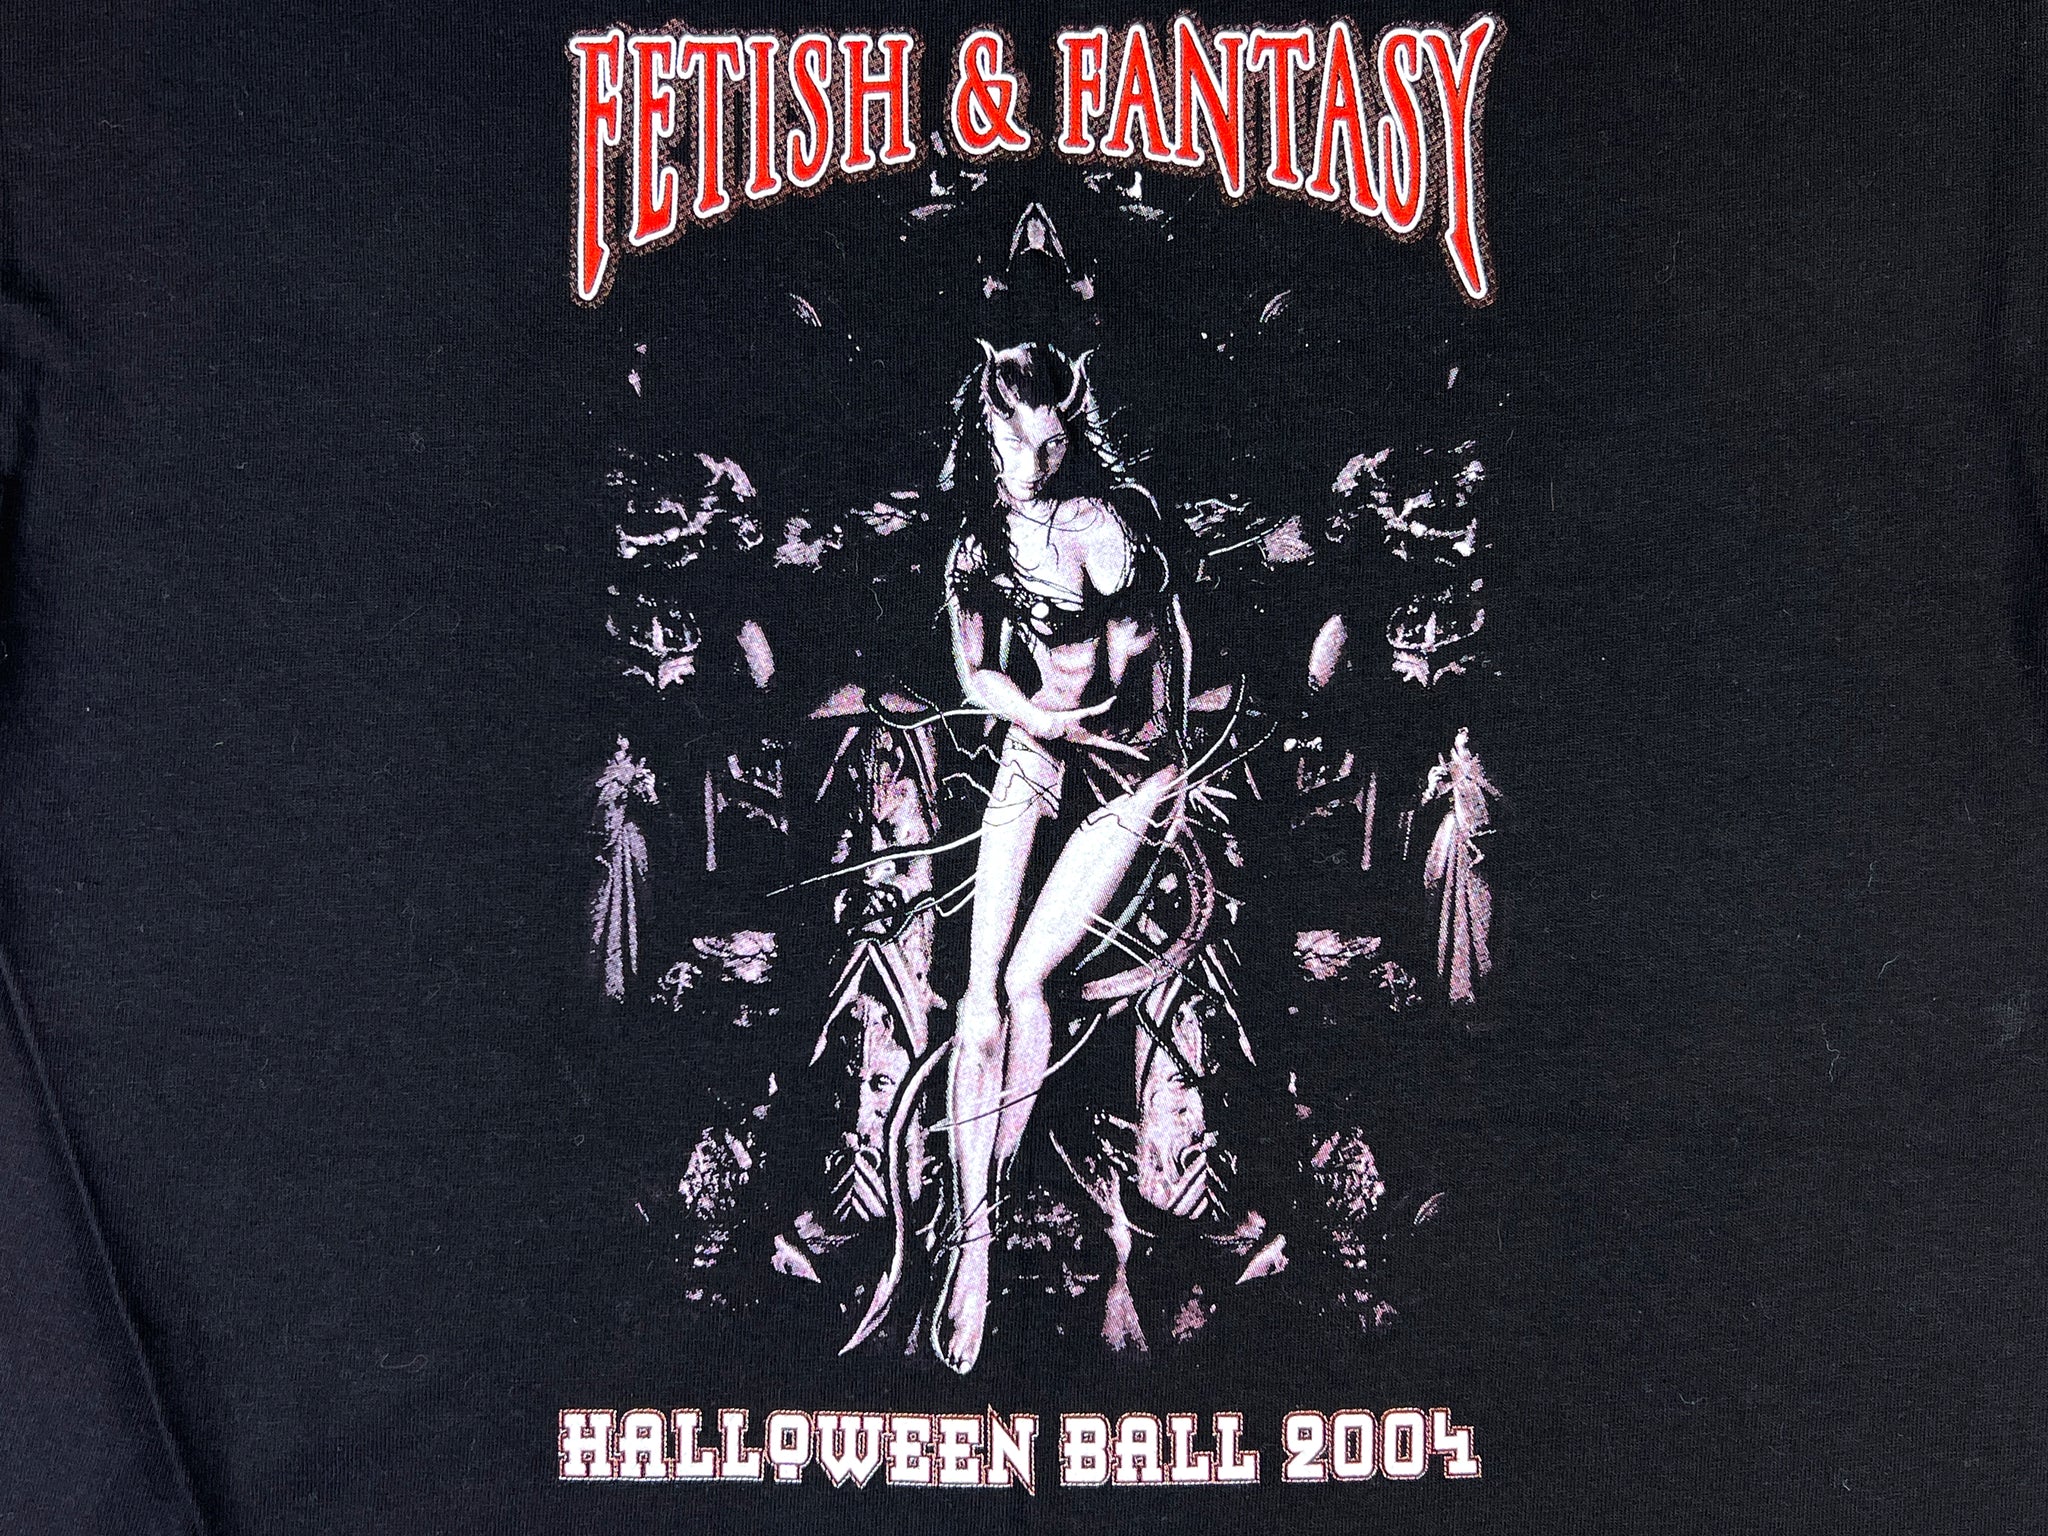 Fetish & Fantasy Halloween Ball 2004 T-Shirt